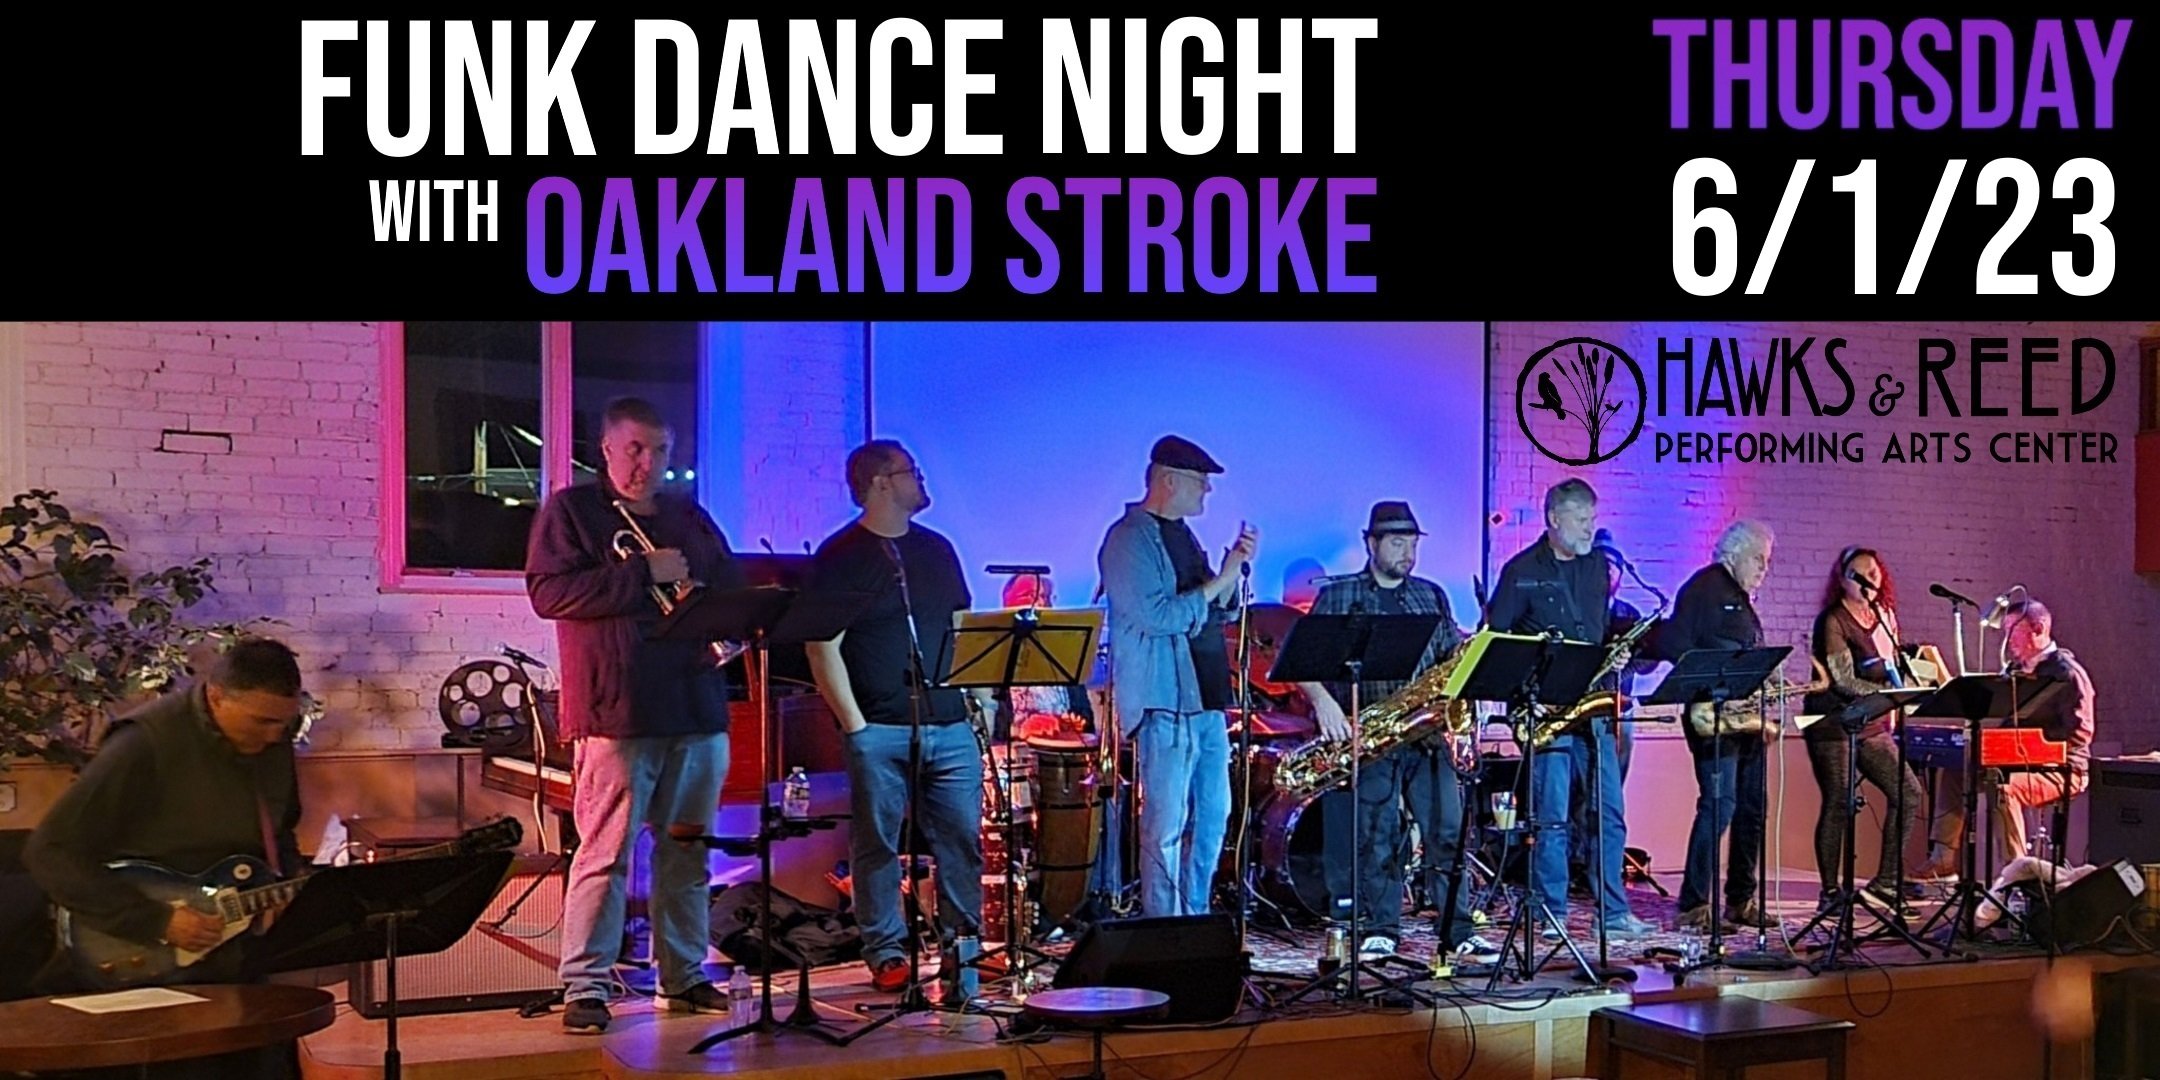 Funk Dance Night with Oakland Stroke